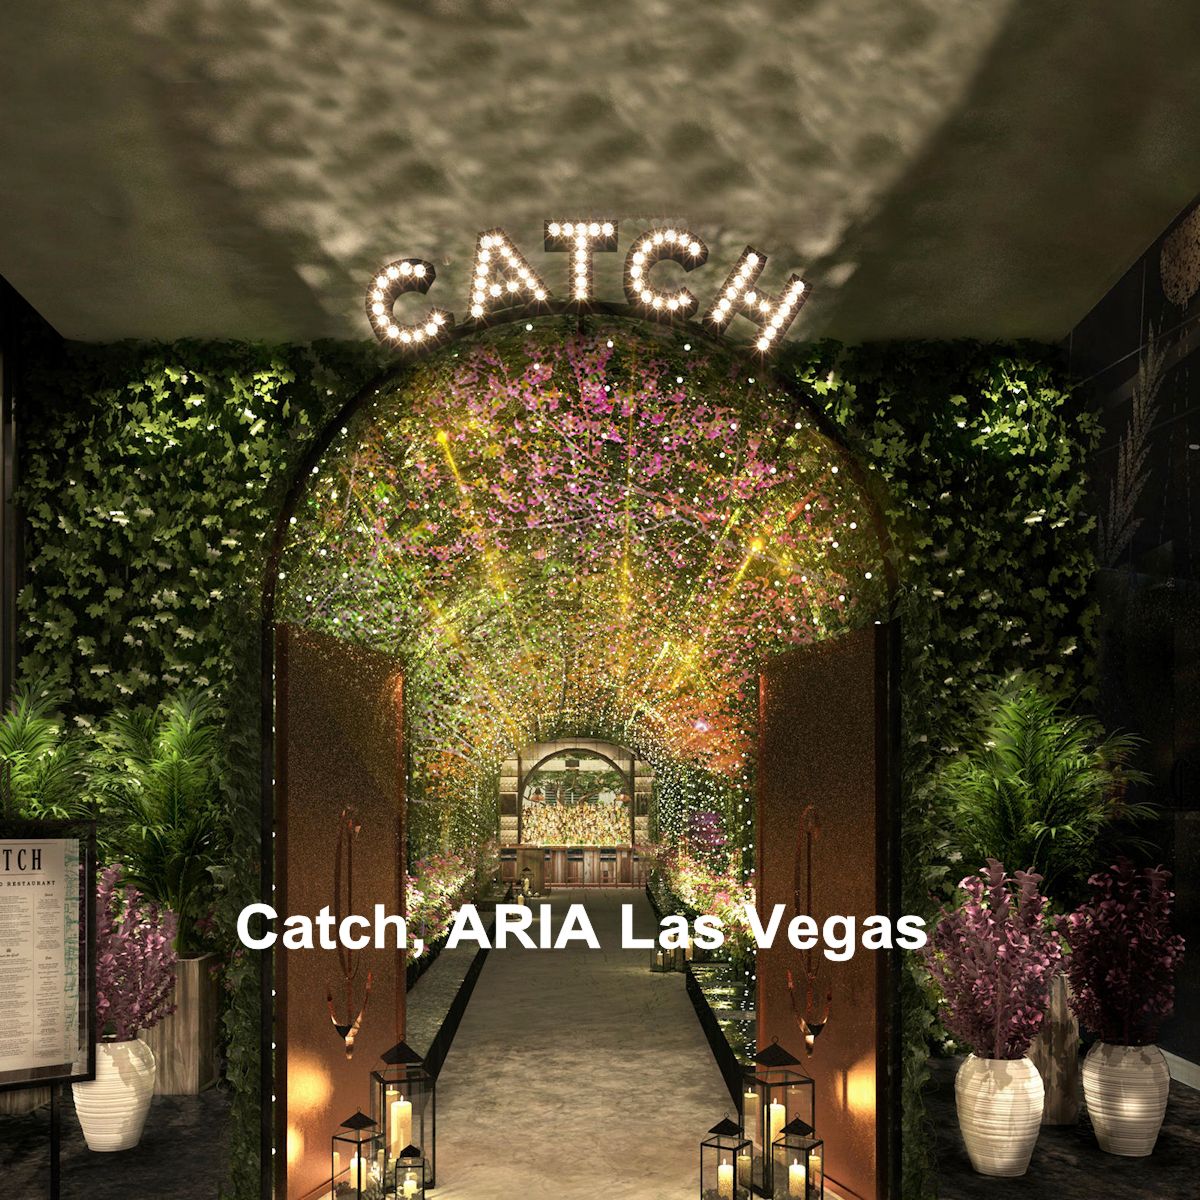 Entry of CATCH Las Vegas in ARIA.